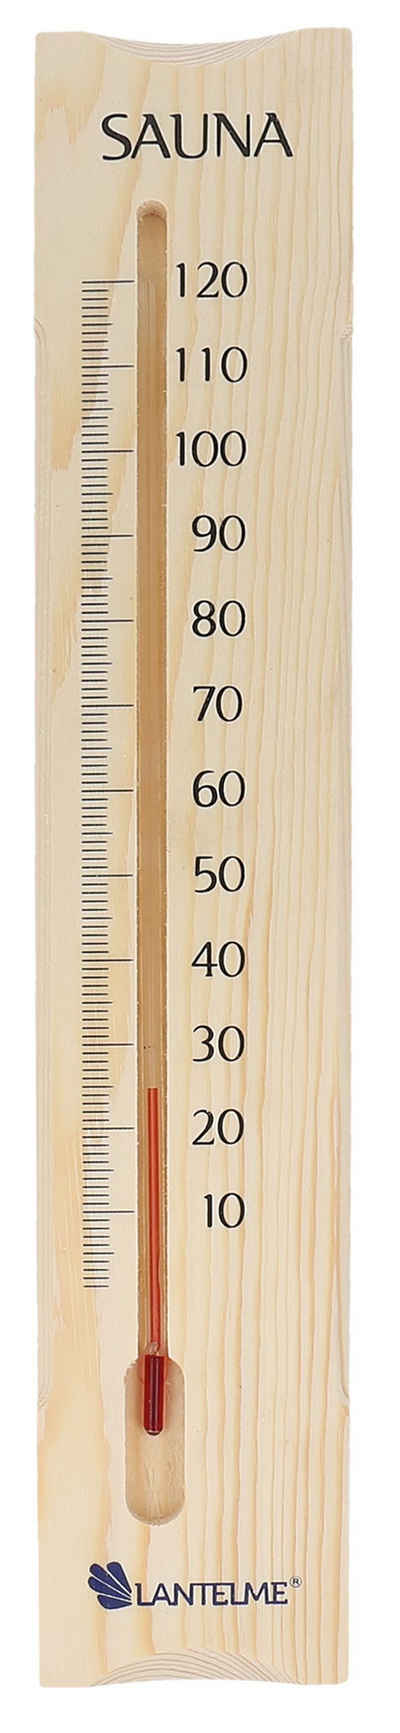 Lantelme Badethermometer Saunathermometer, 38cm, Kiefernholz